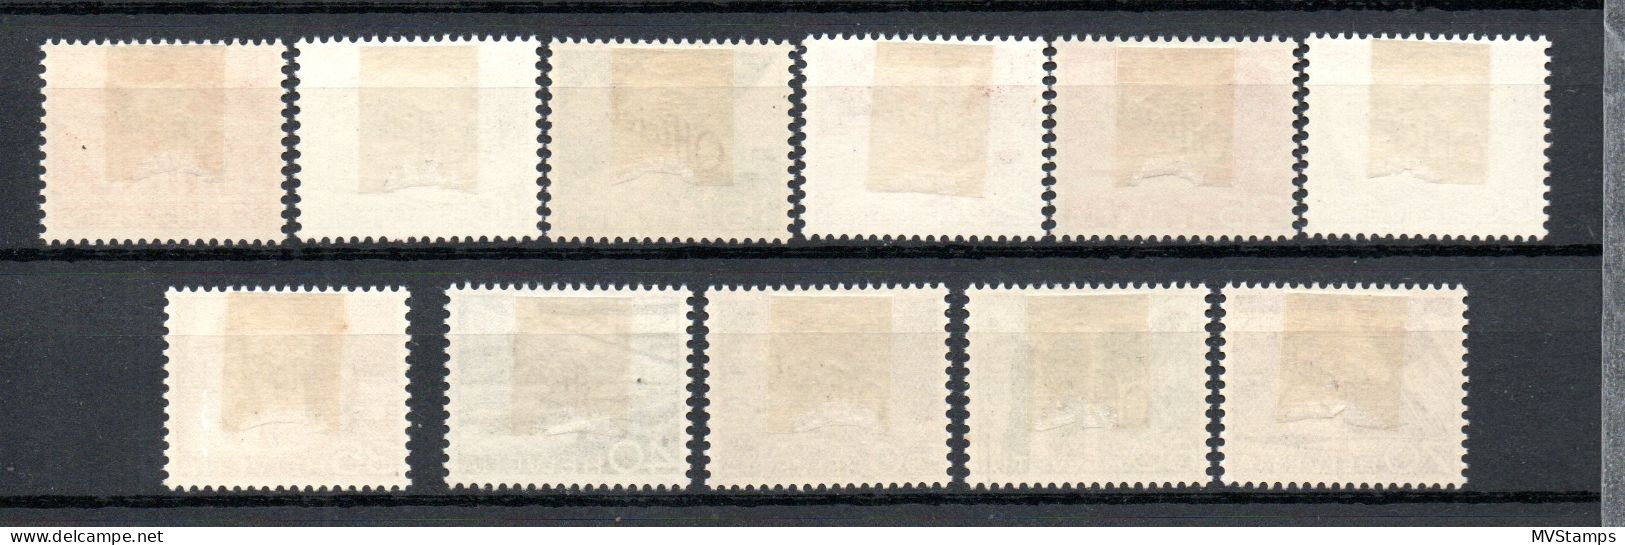 Switzerland 1950 Set Overprinted Service Stamps (Michel D 64/74) MLH - Dienstzegels